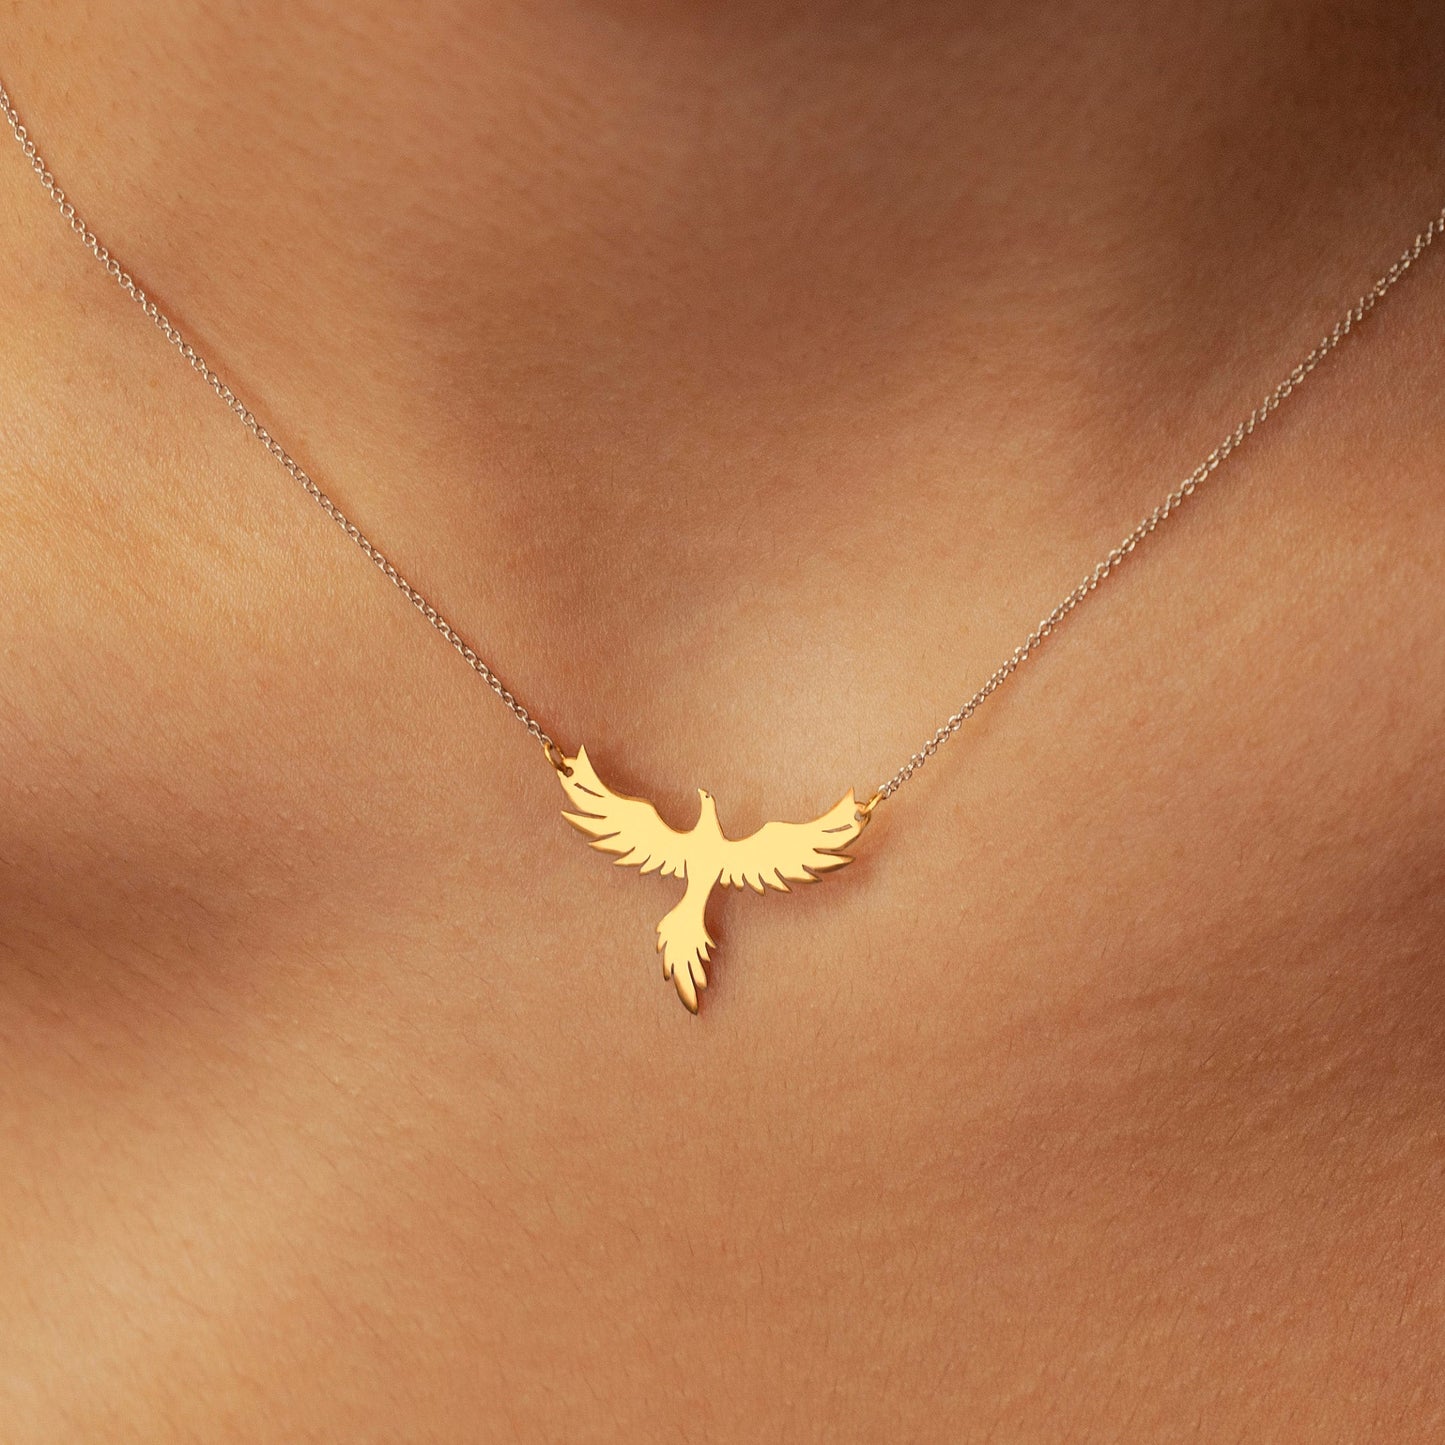 Rising Phoenix Pendant Necklace